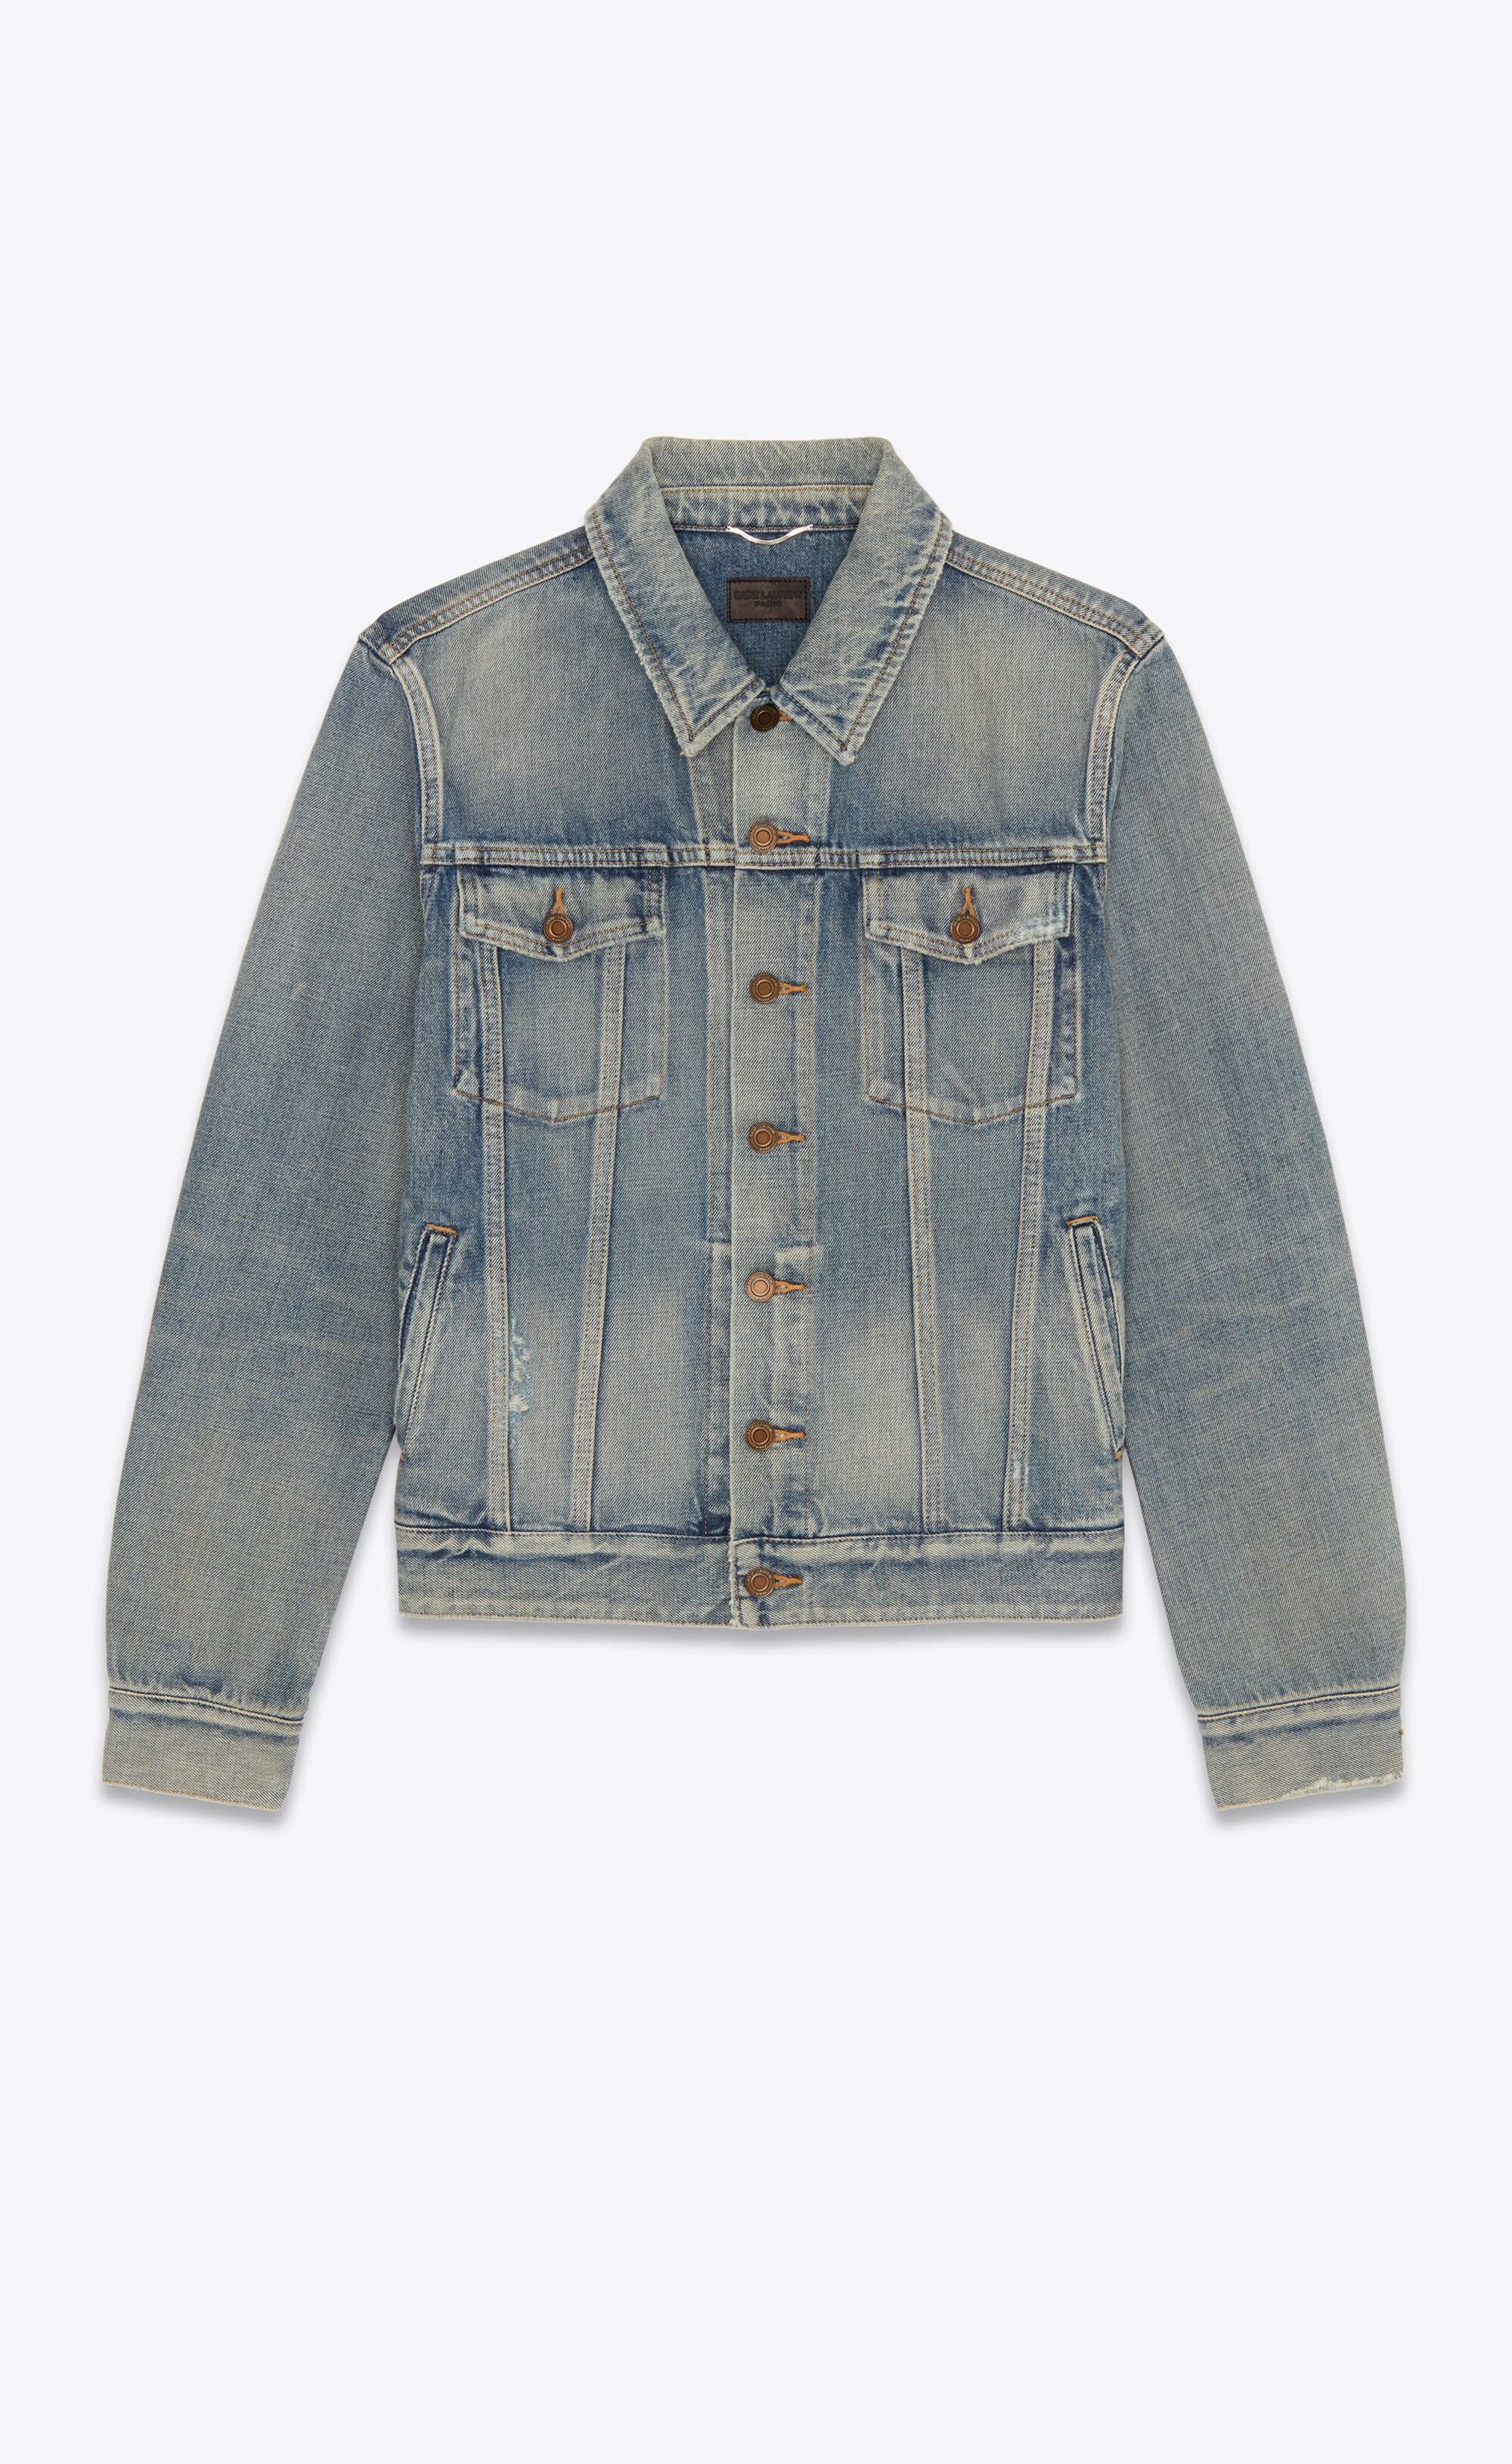 classic jacket in melrose blue denim - 1